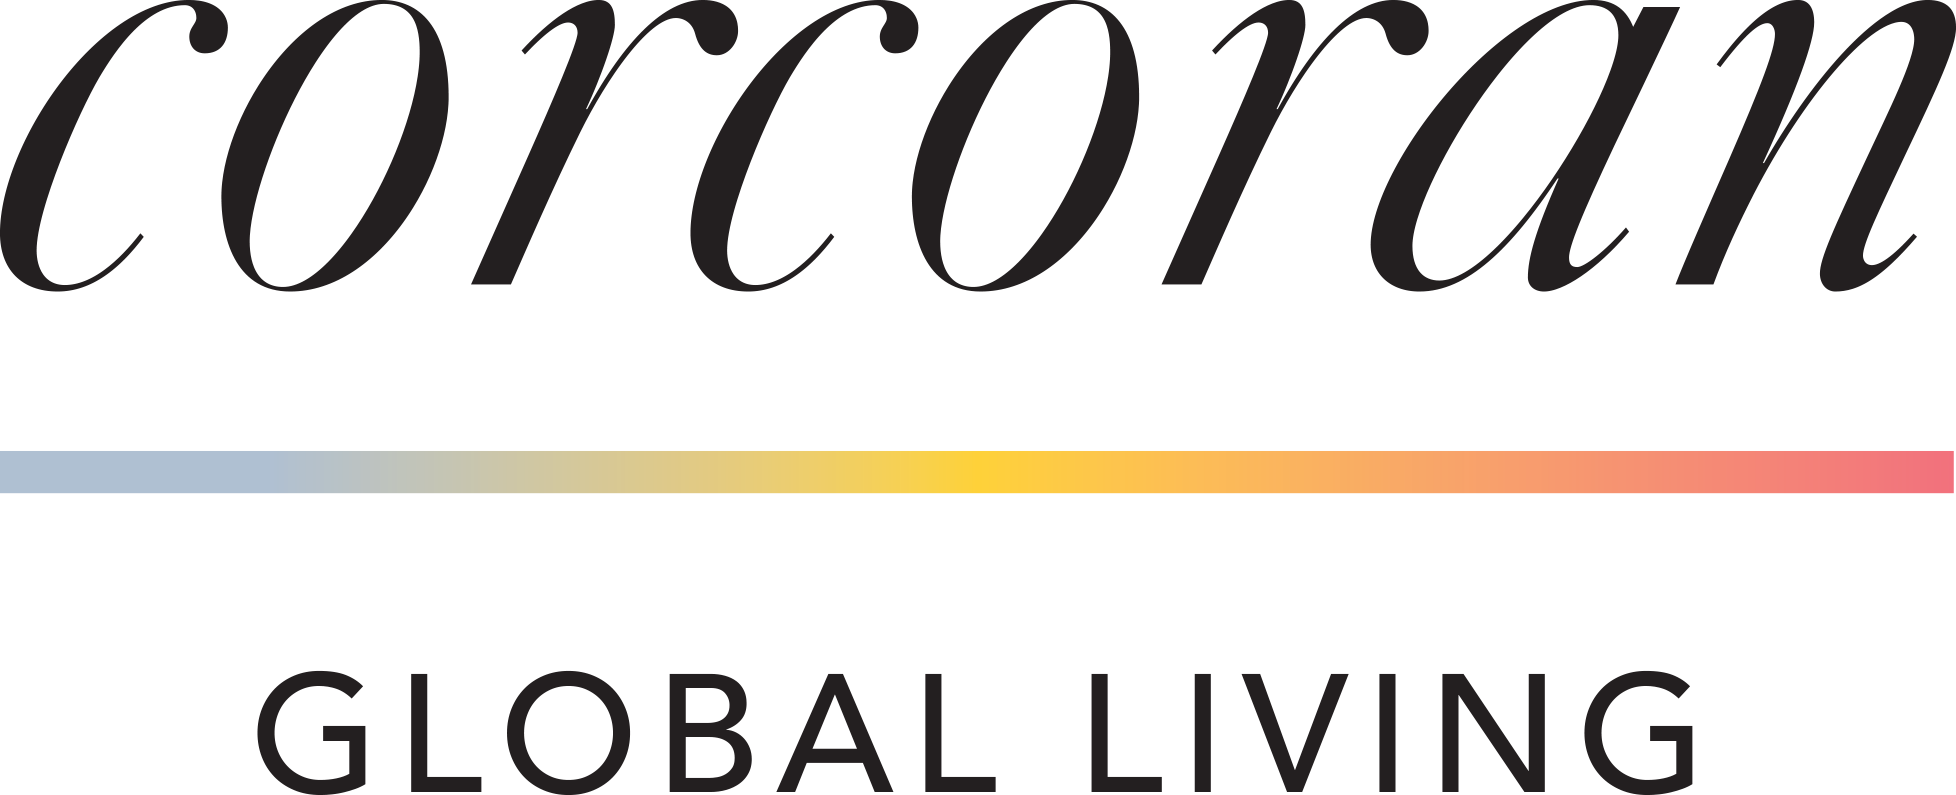 Corcoran Global Living logo